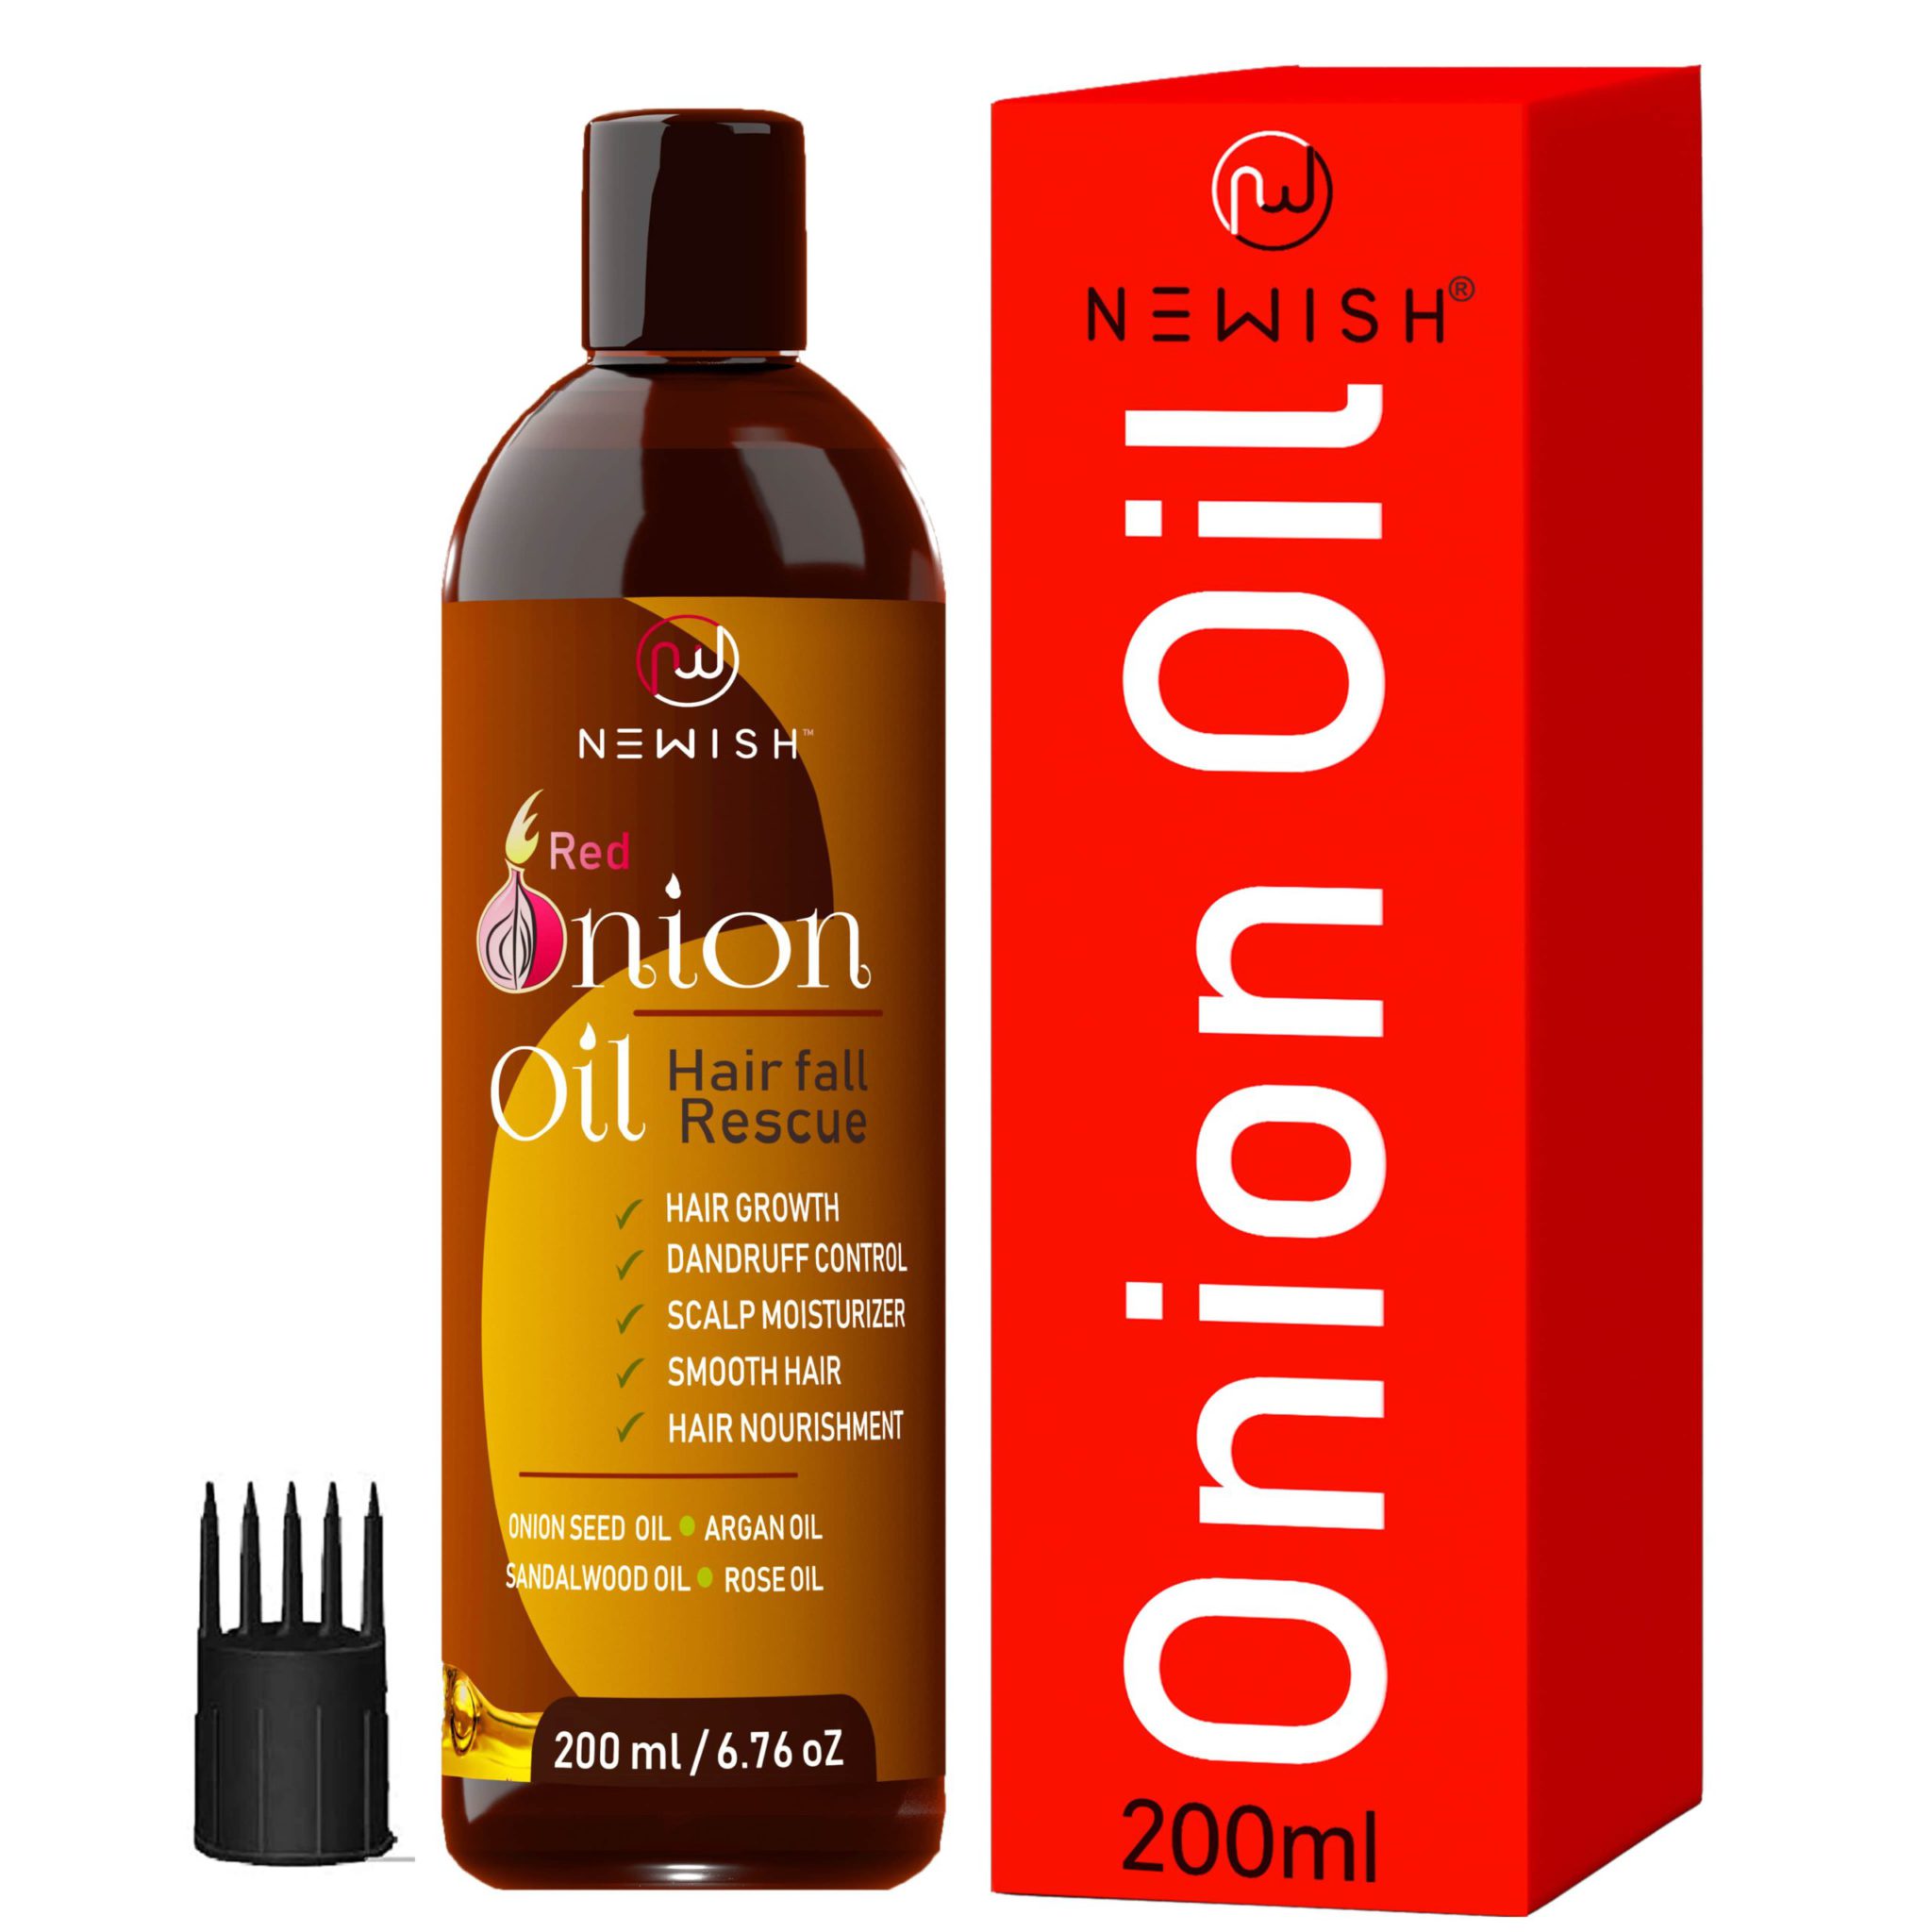 onion oil for hair fall